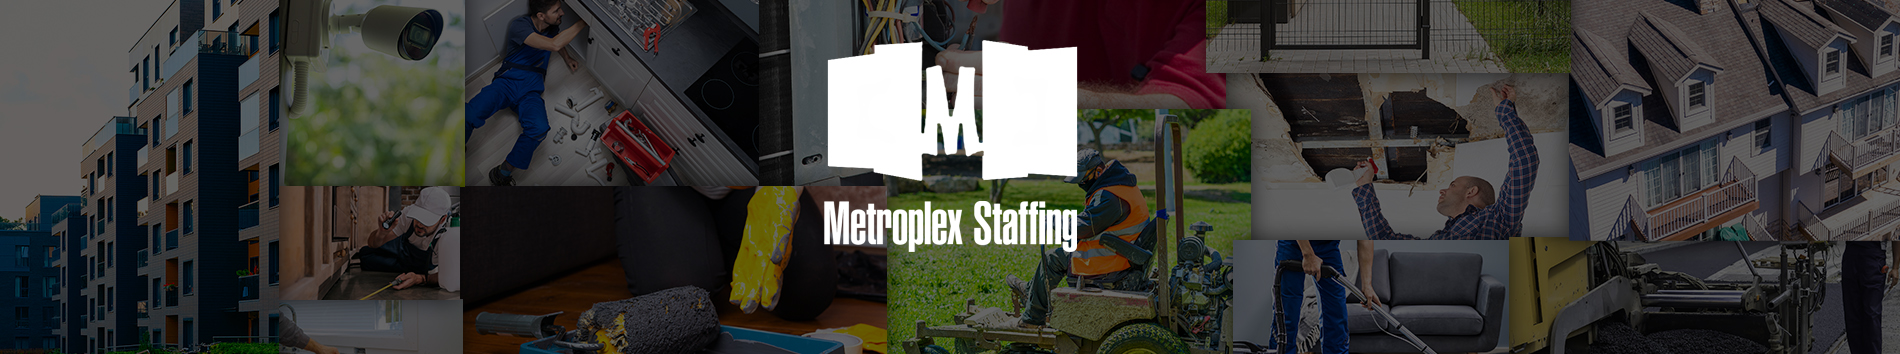 MetroPlex Staffing LLC.